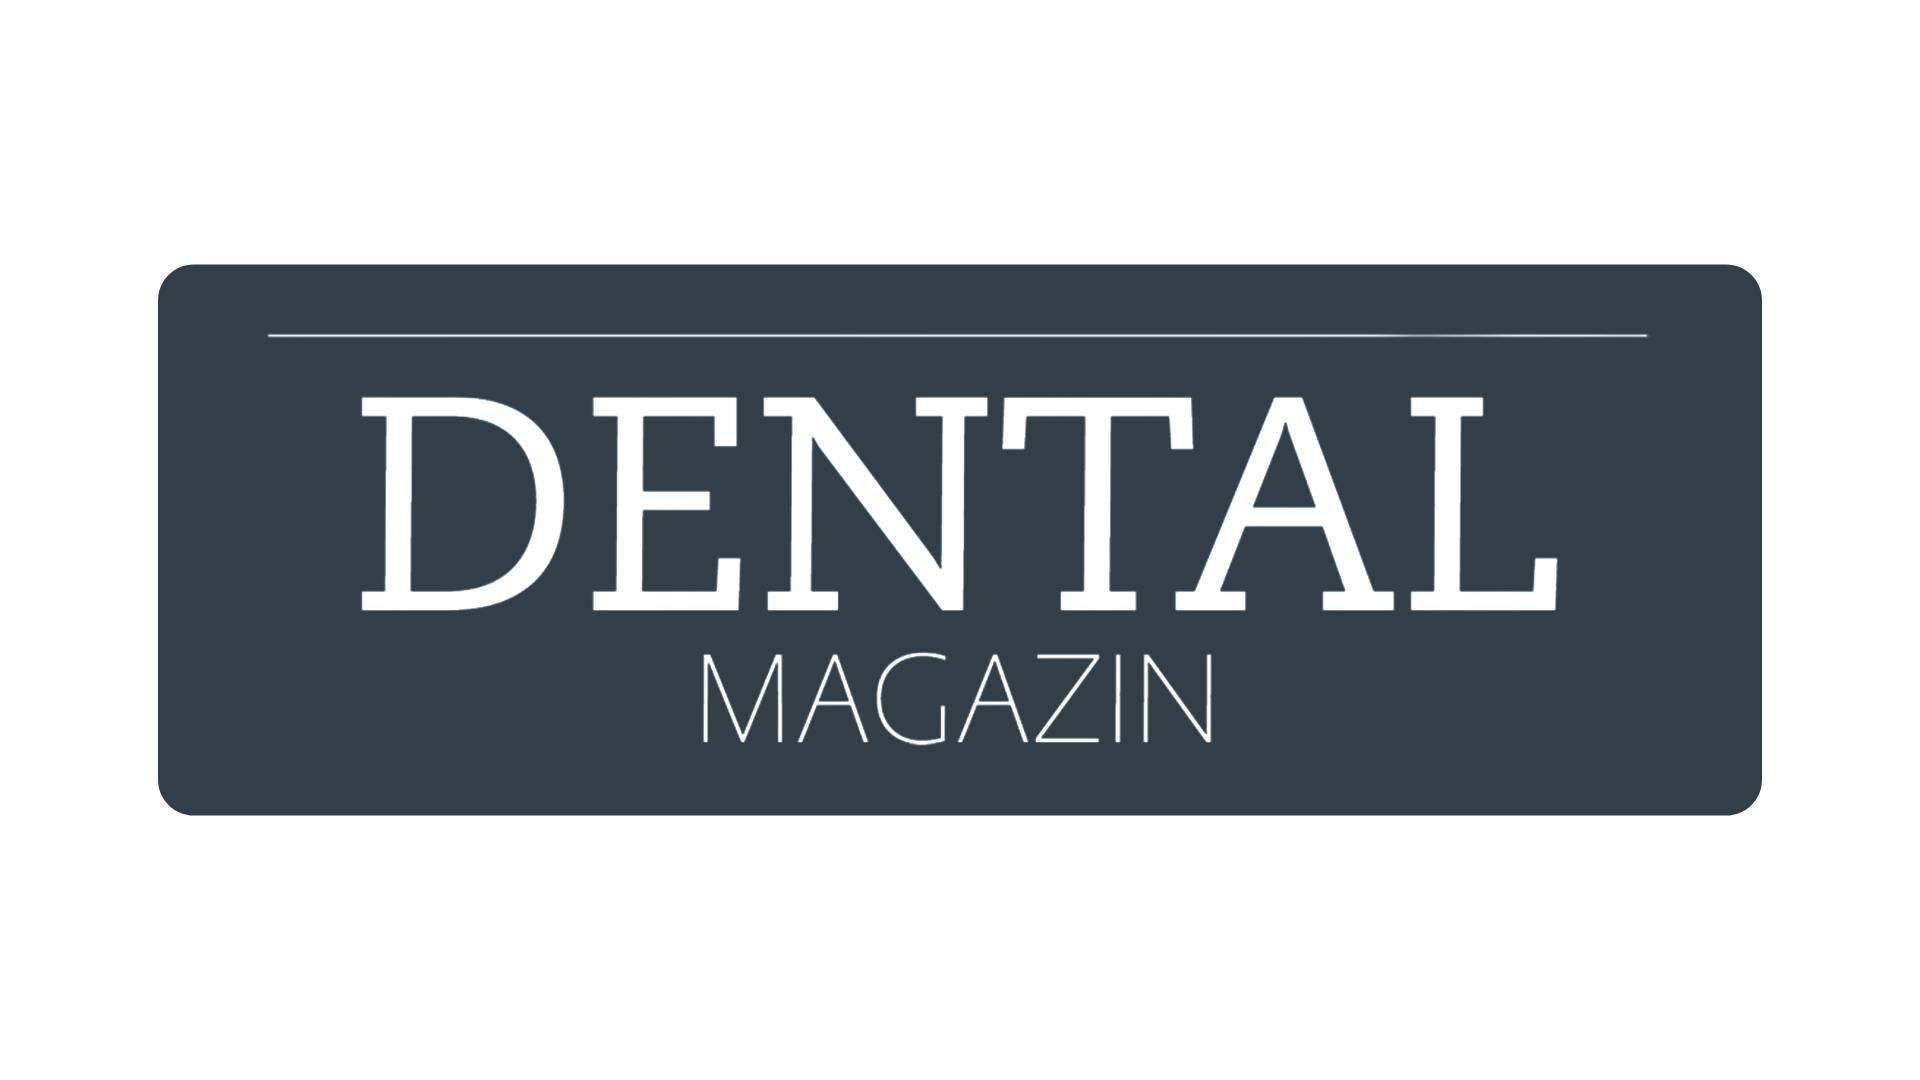 Dental Magazin